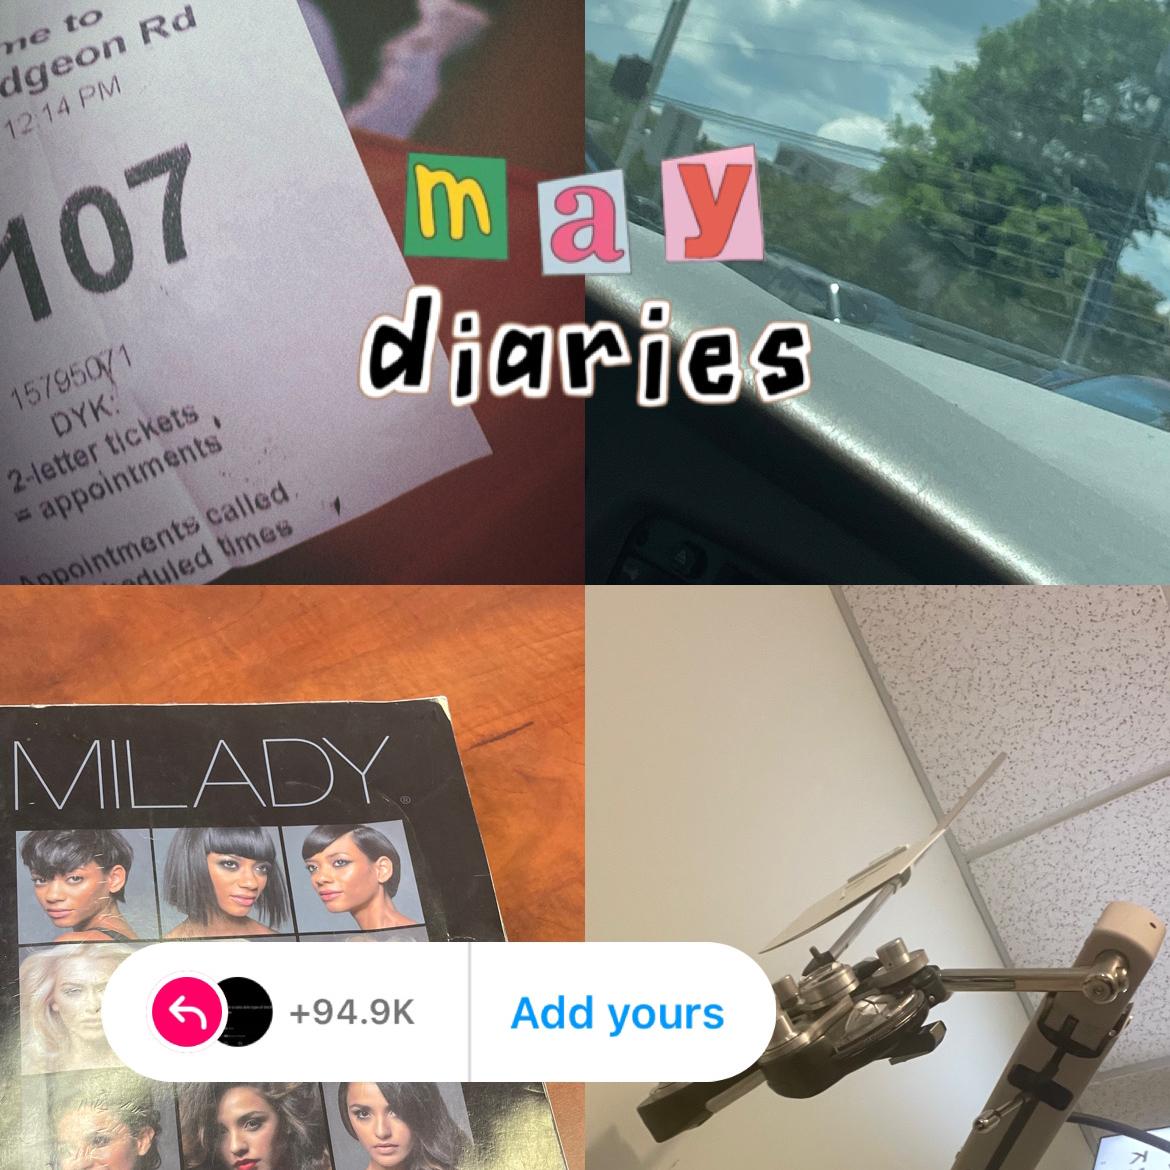 Miya's images